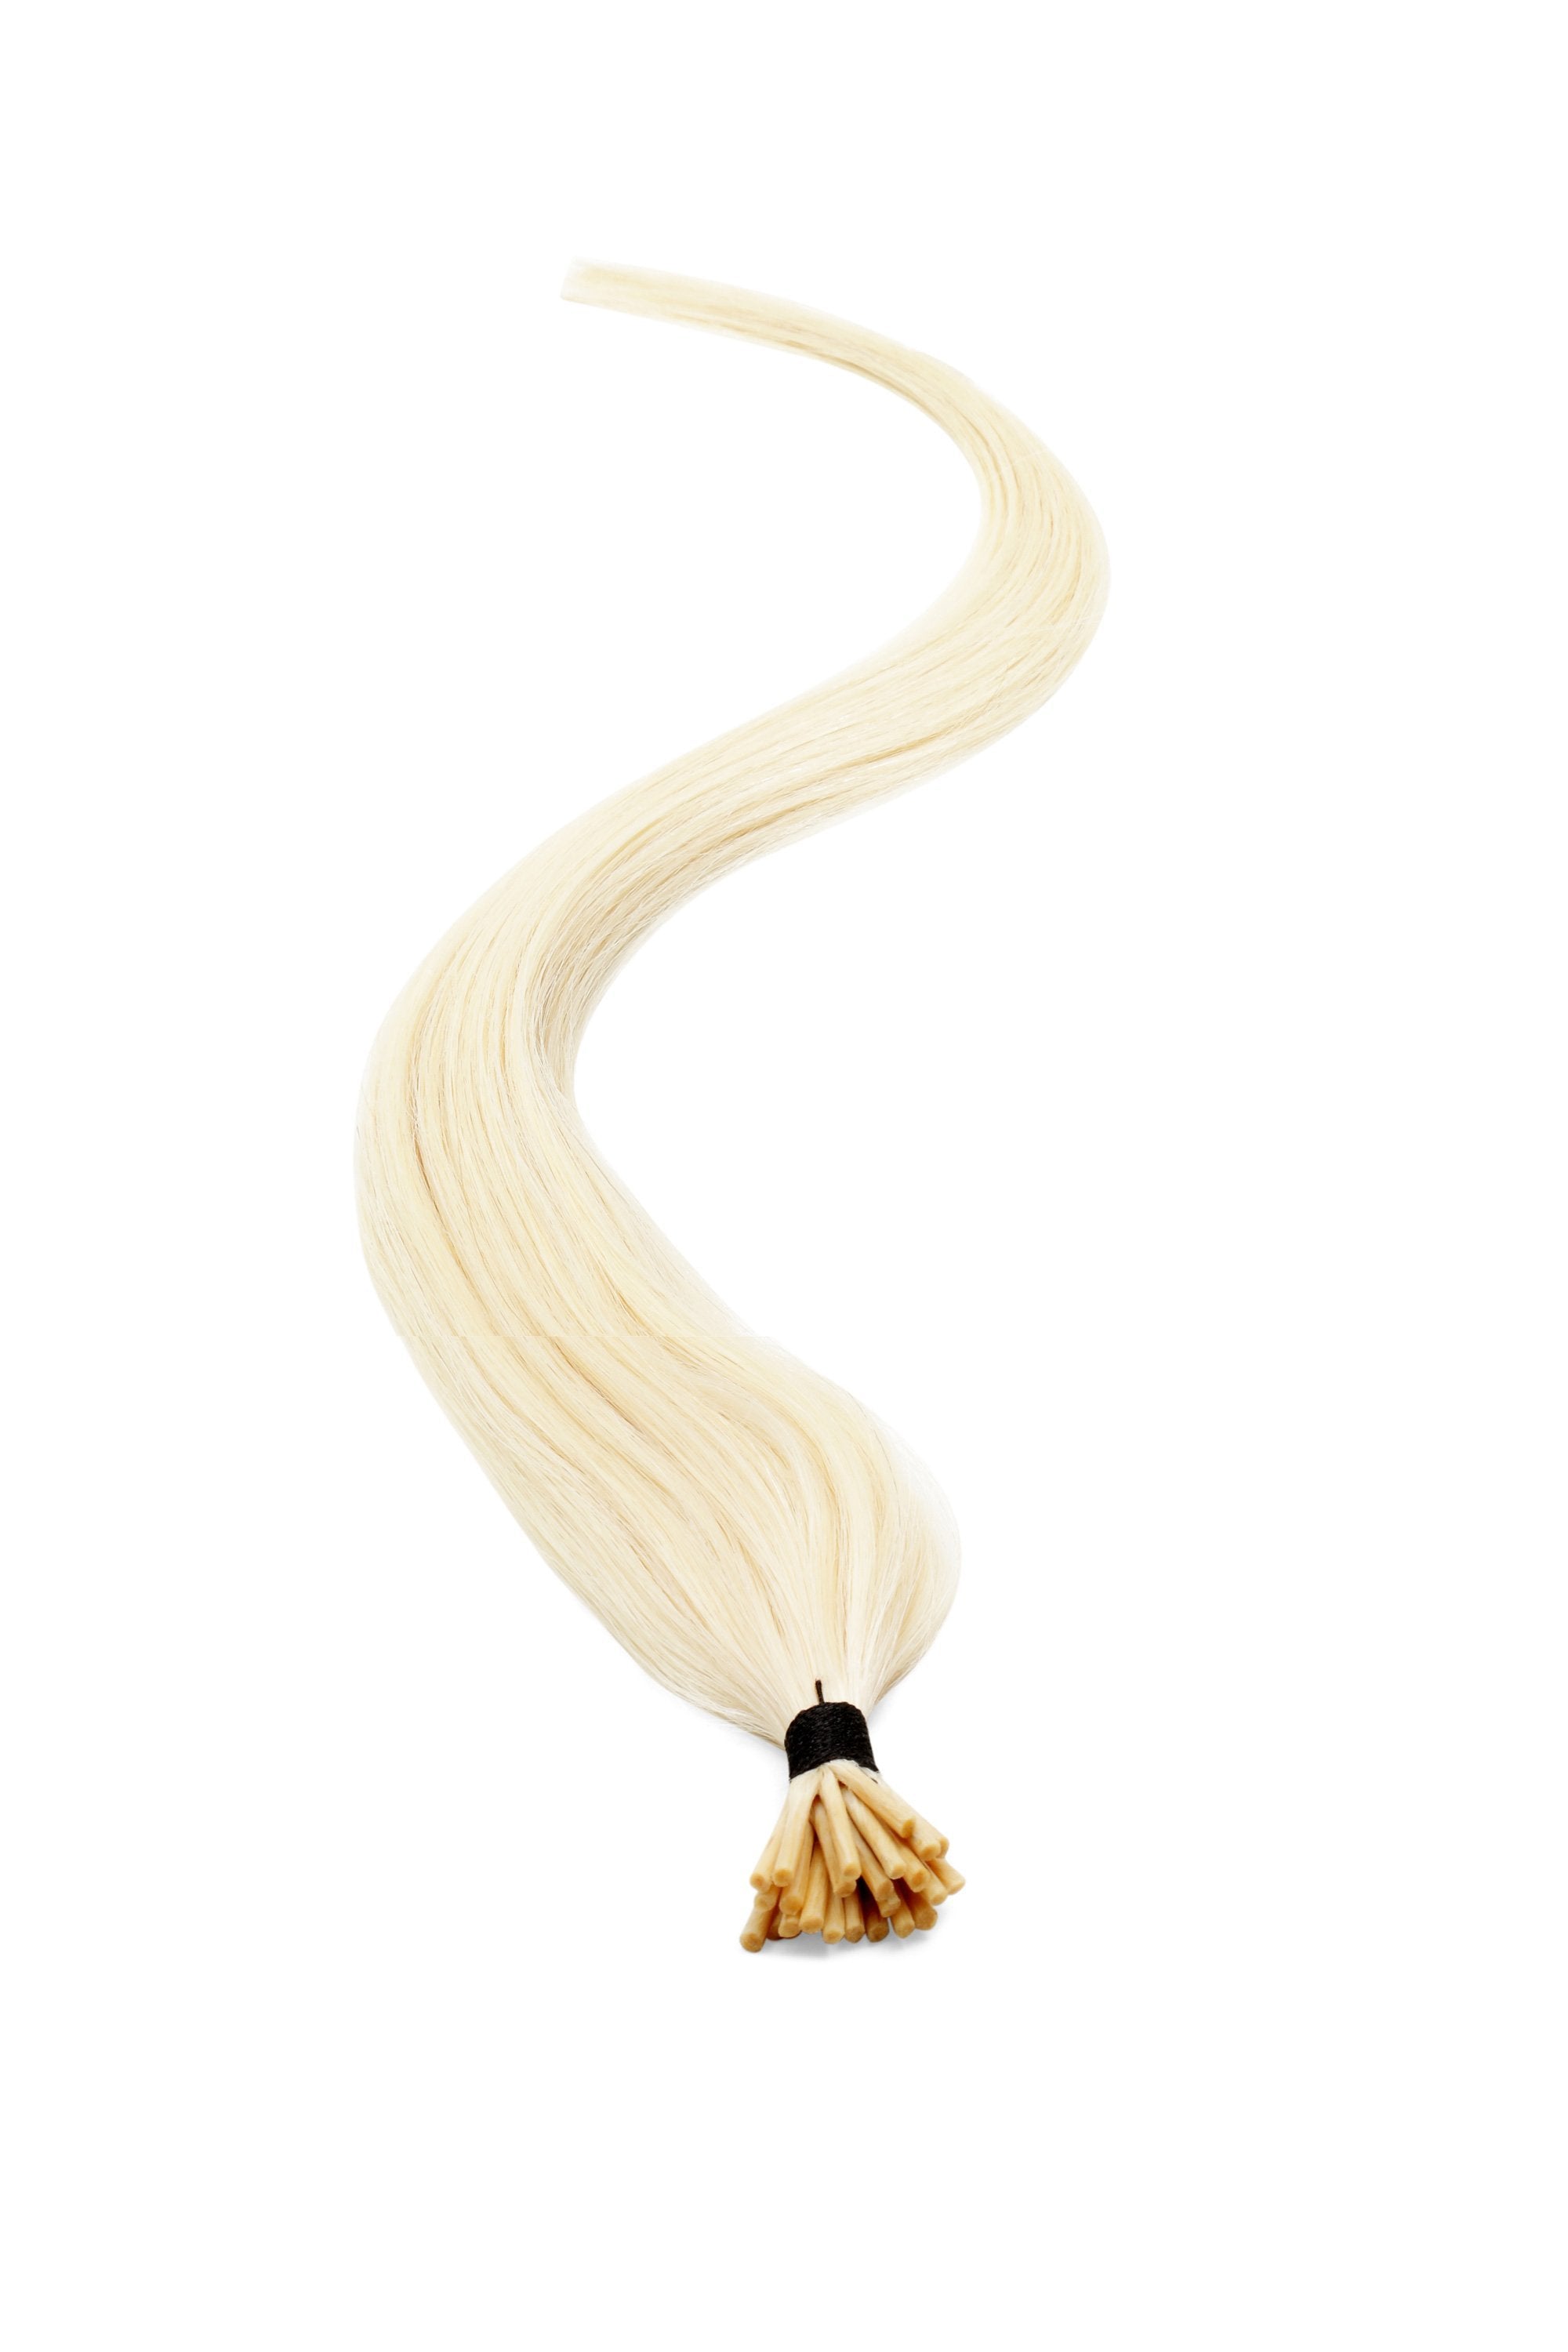 I-Tip Human Hair Extensions 18" Platinum Blondest Blonde (600) - Beauty Hair Products LtdHair Extensions